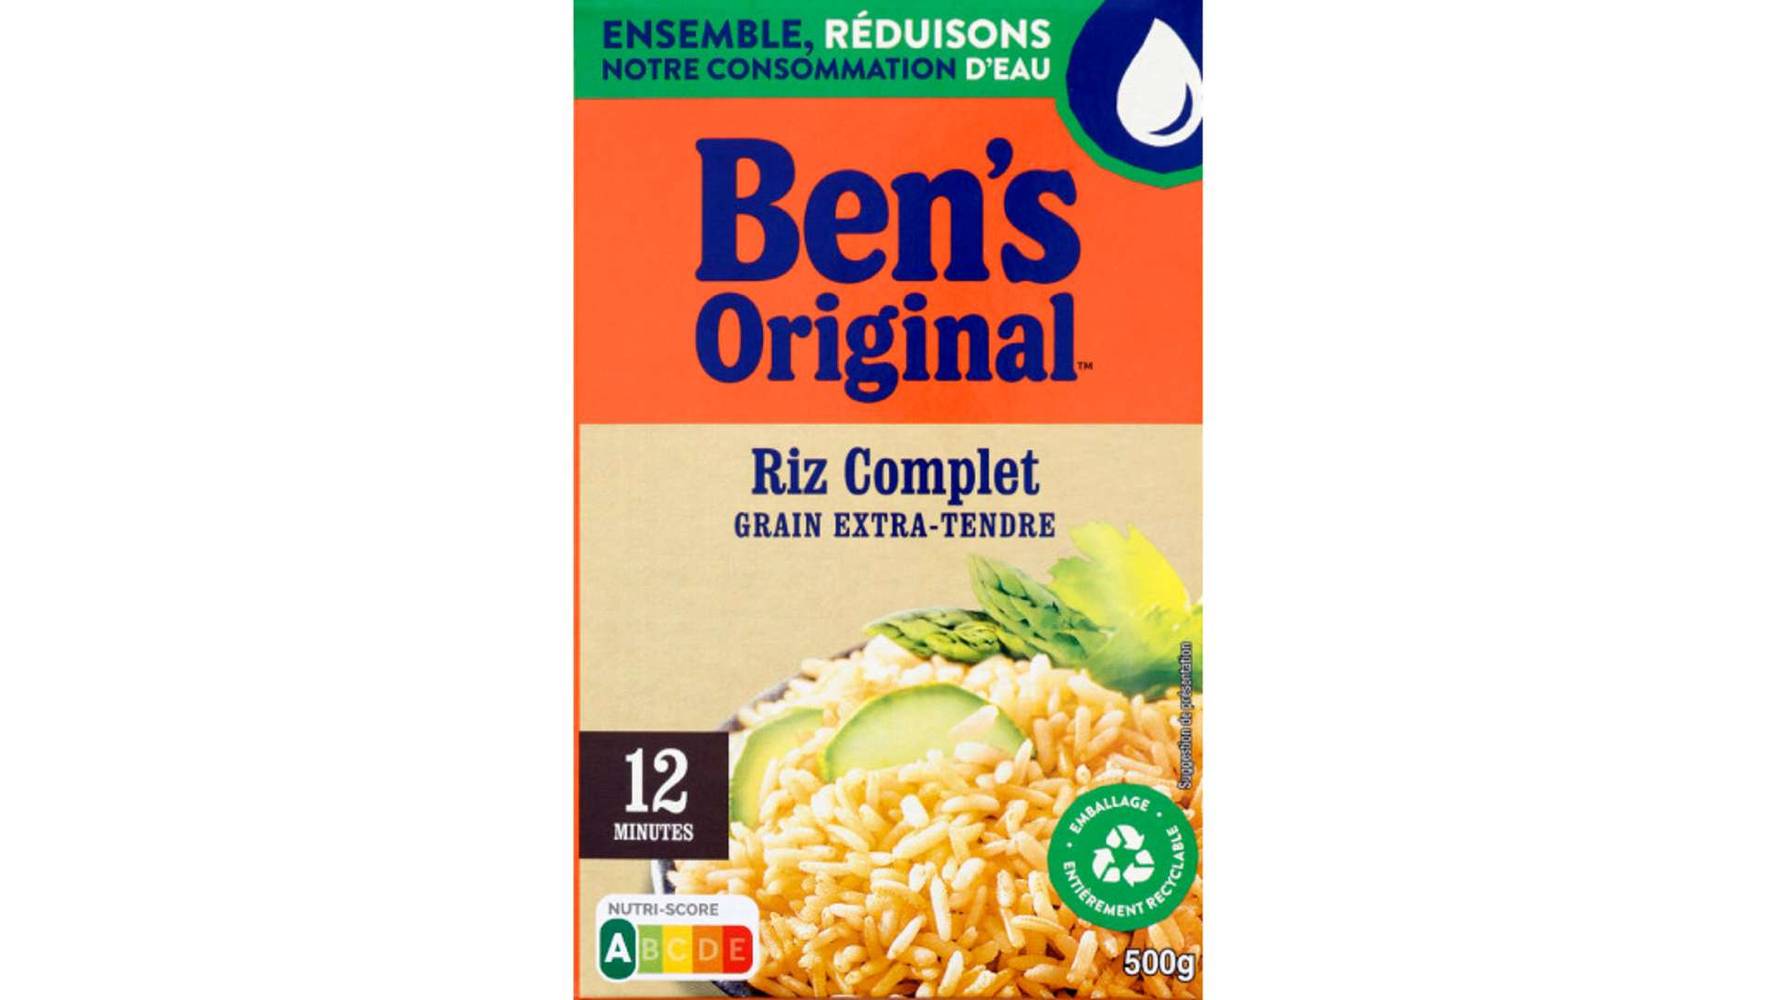 Ben's Original - Riz complet grain extra-tendre